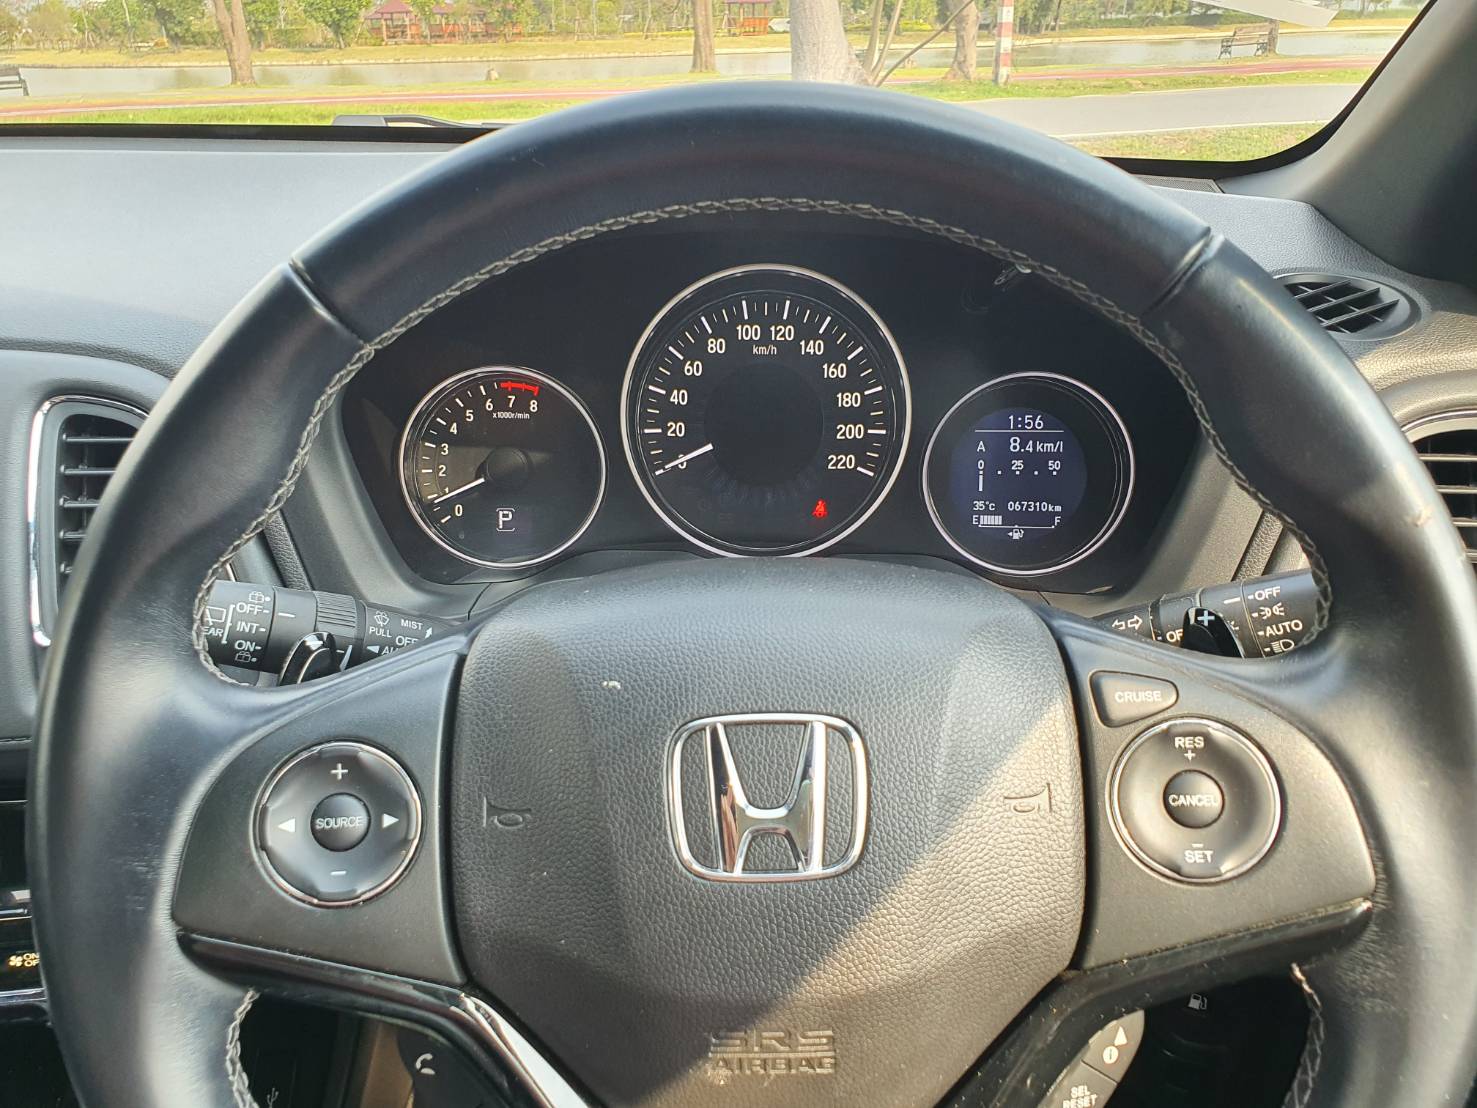 Honda HRV 1.8RS ปี2019 สีขาว Auto รถมือ1 เช็คศูนย์ตลอด รุ่นTop หลังคาซันรูฟ